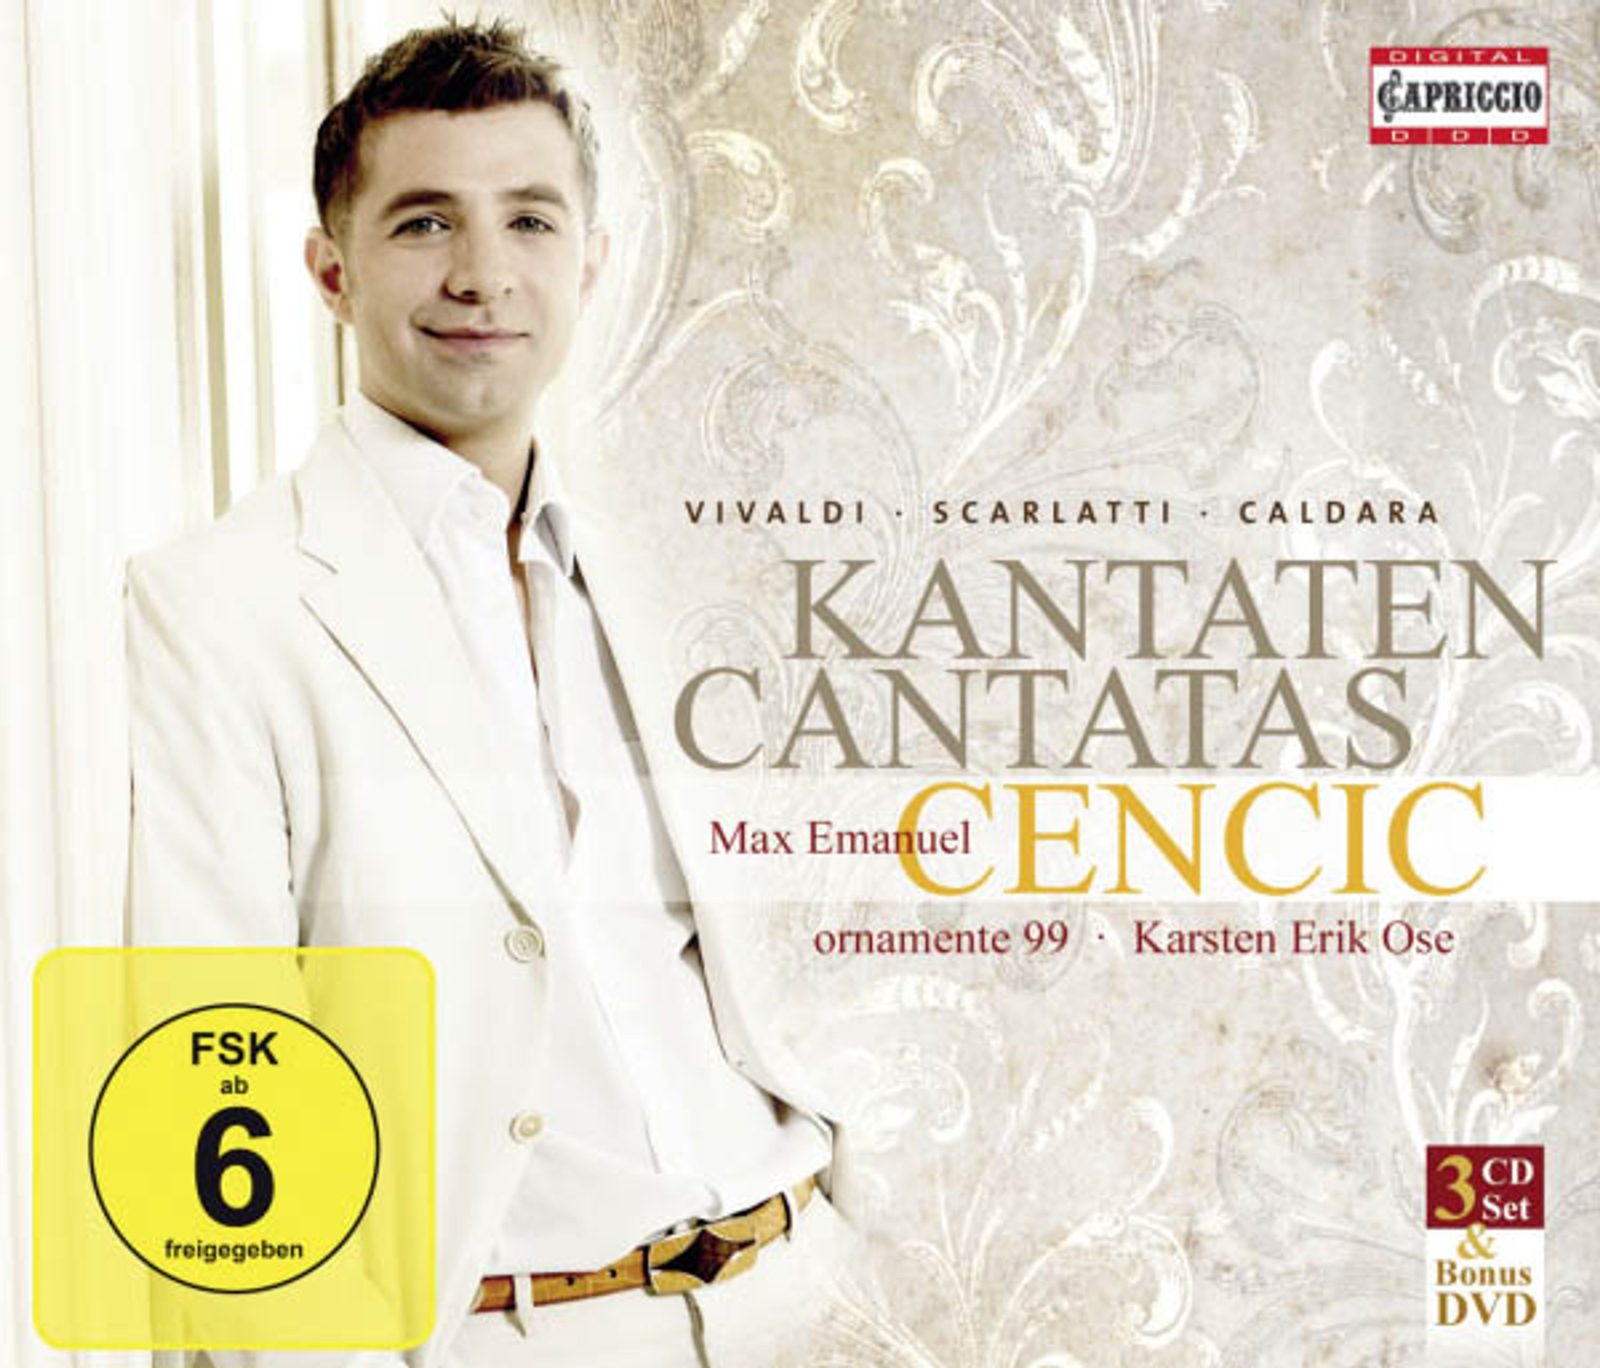 Max Emanuel Cencic CD - Kantaten (Cantatas)